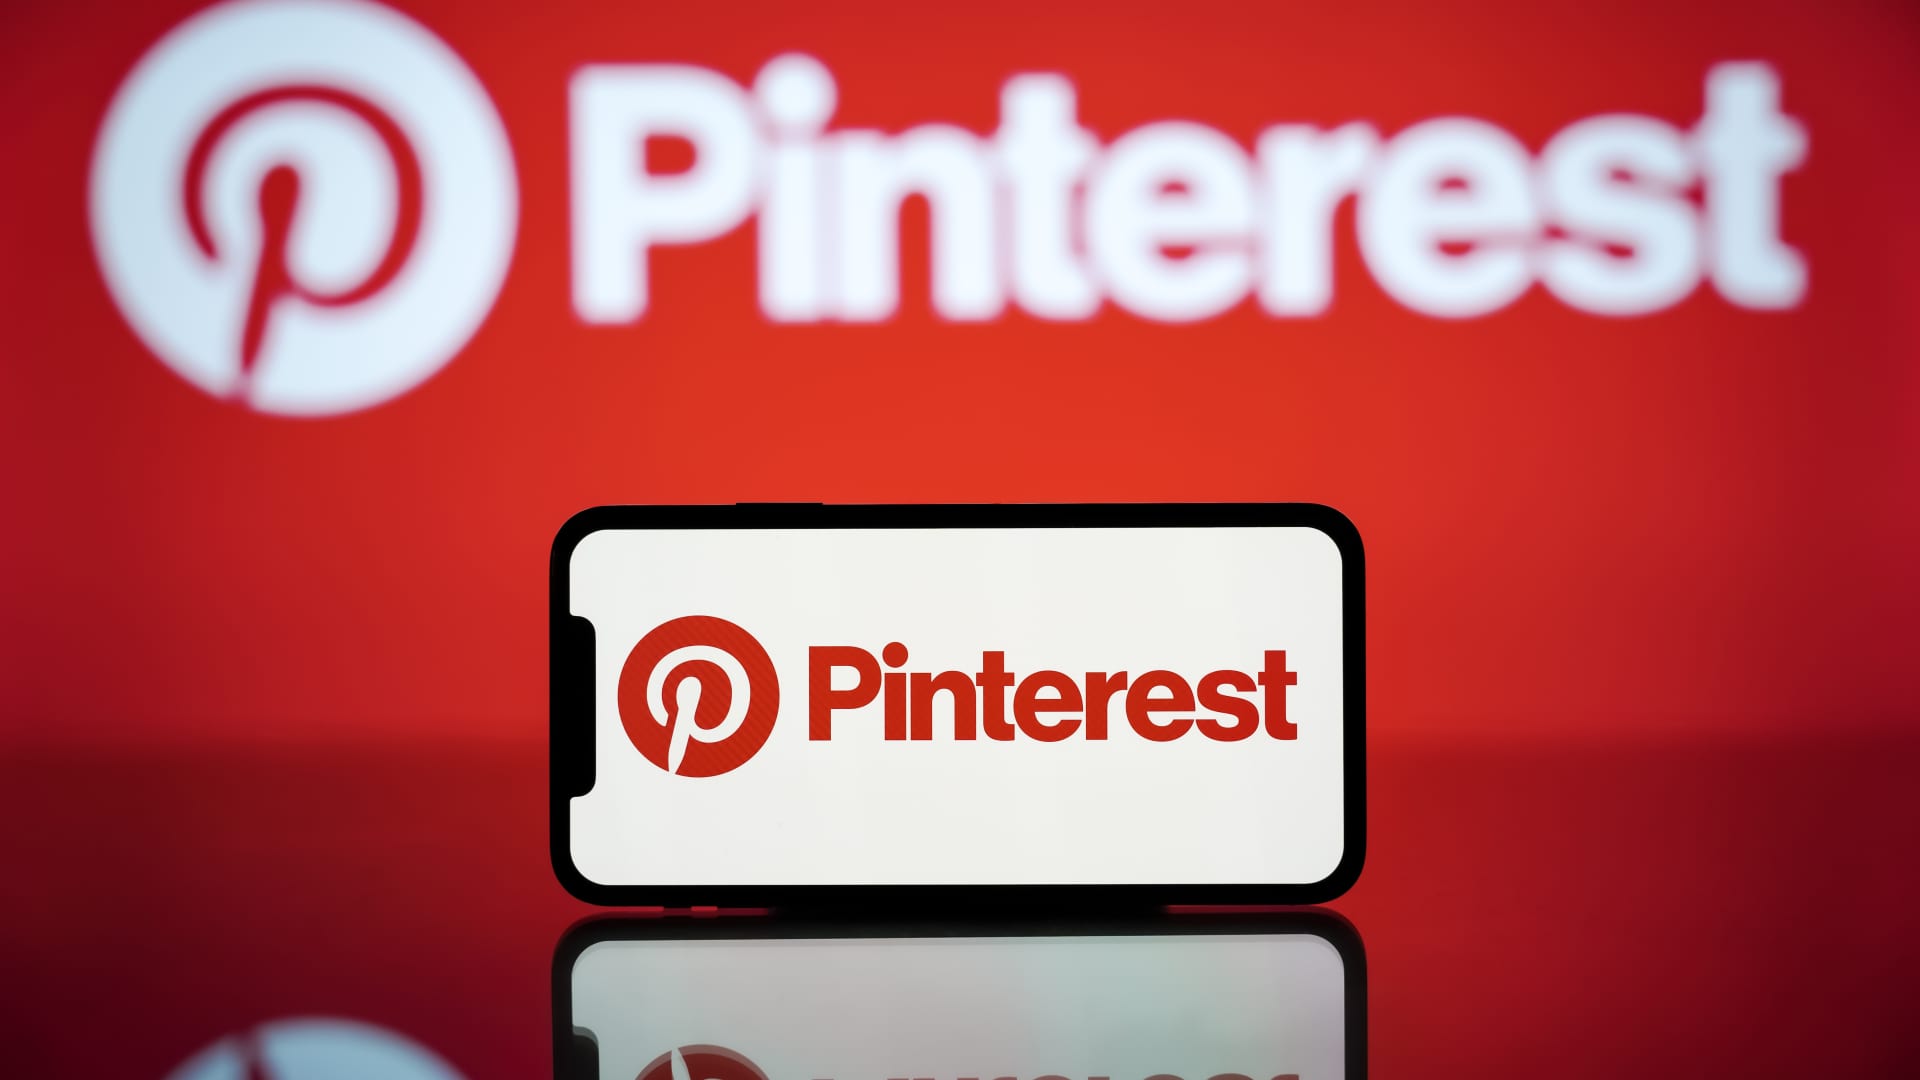 Pinterest shares soar 16% on earnings beat, strong revenue growth | MuaneToraya